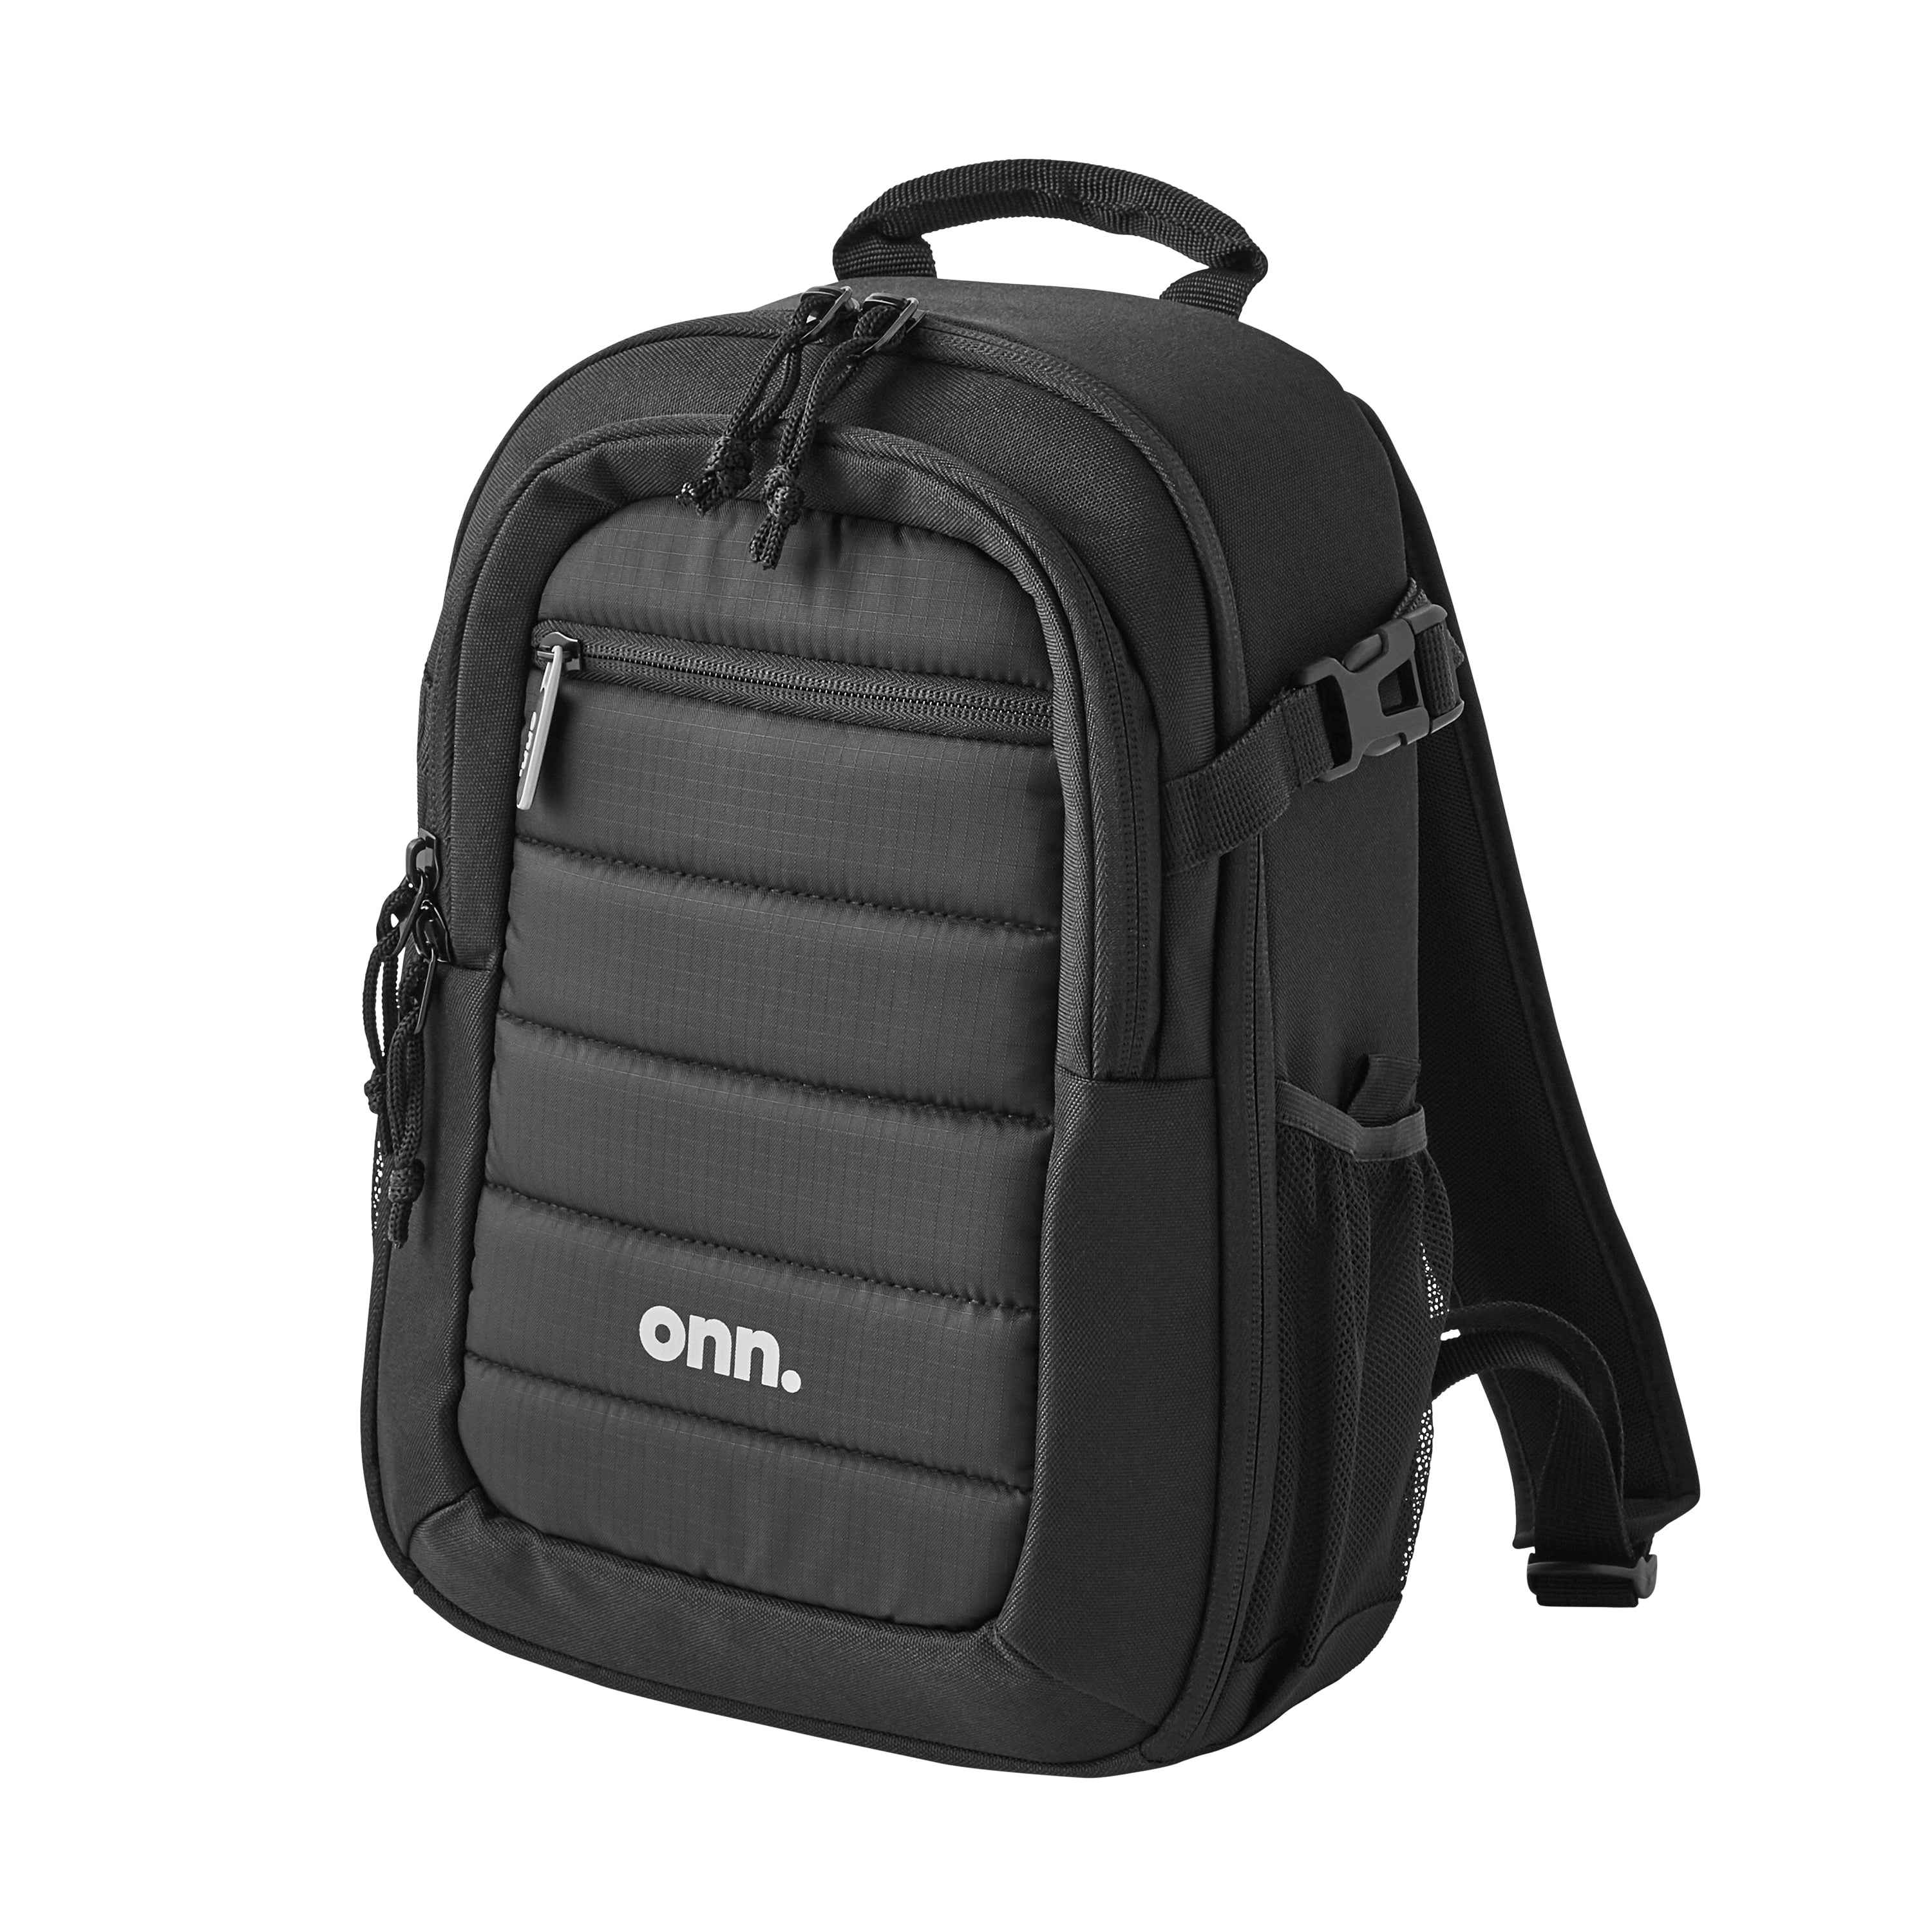 Water-resistant DSLR camera backpack with adjustable pockets